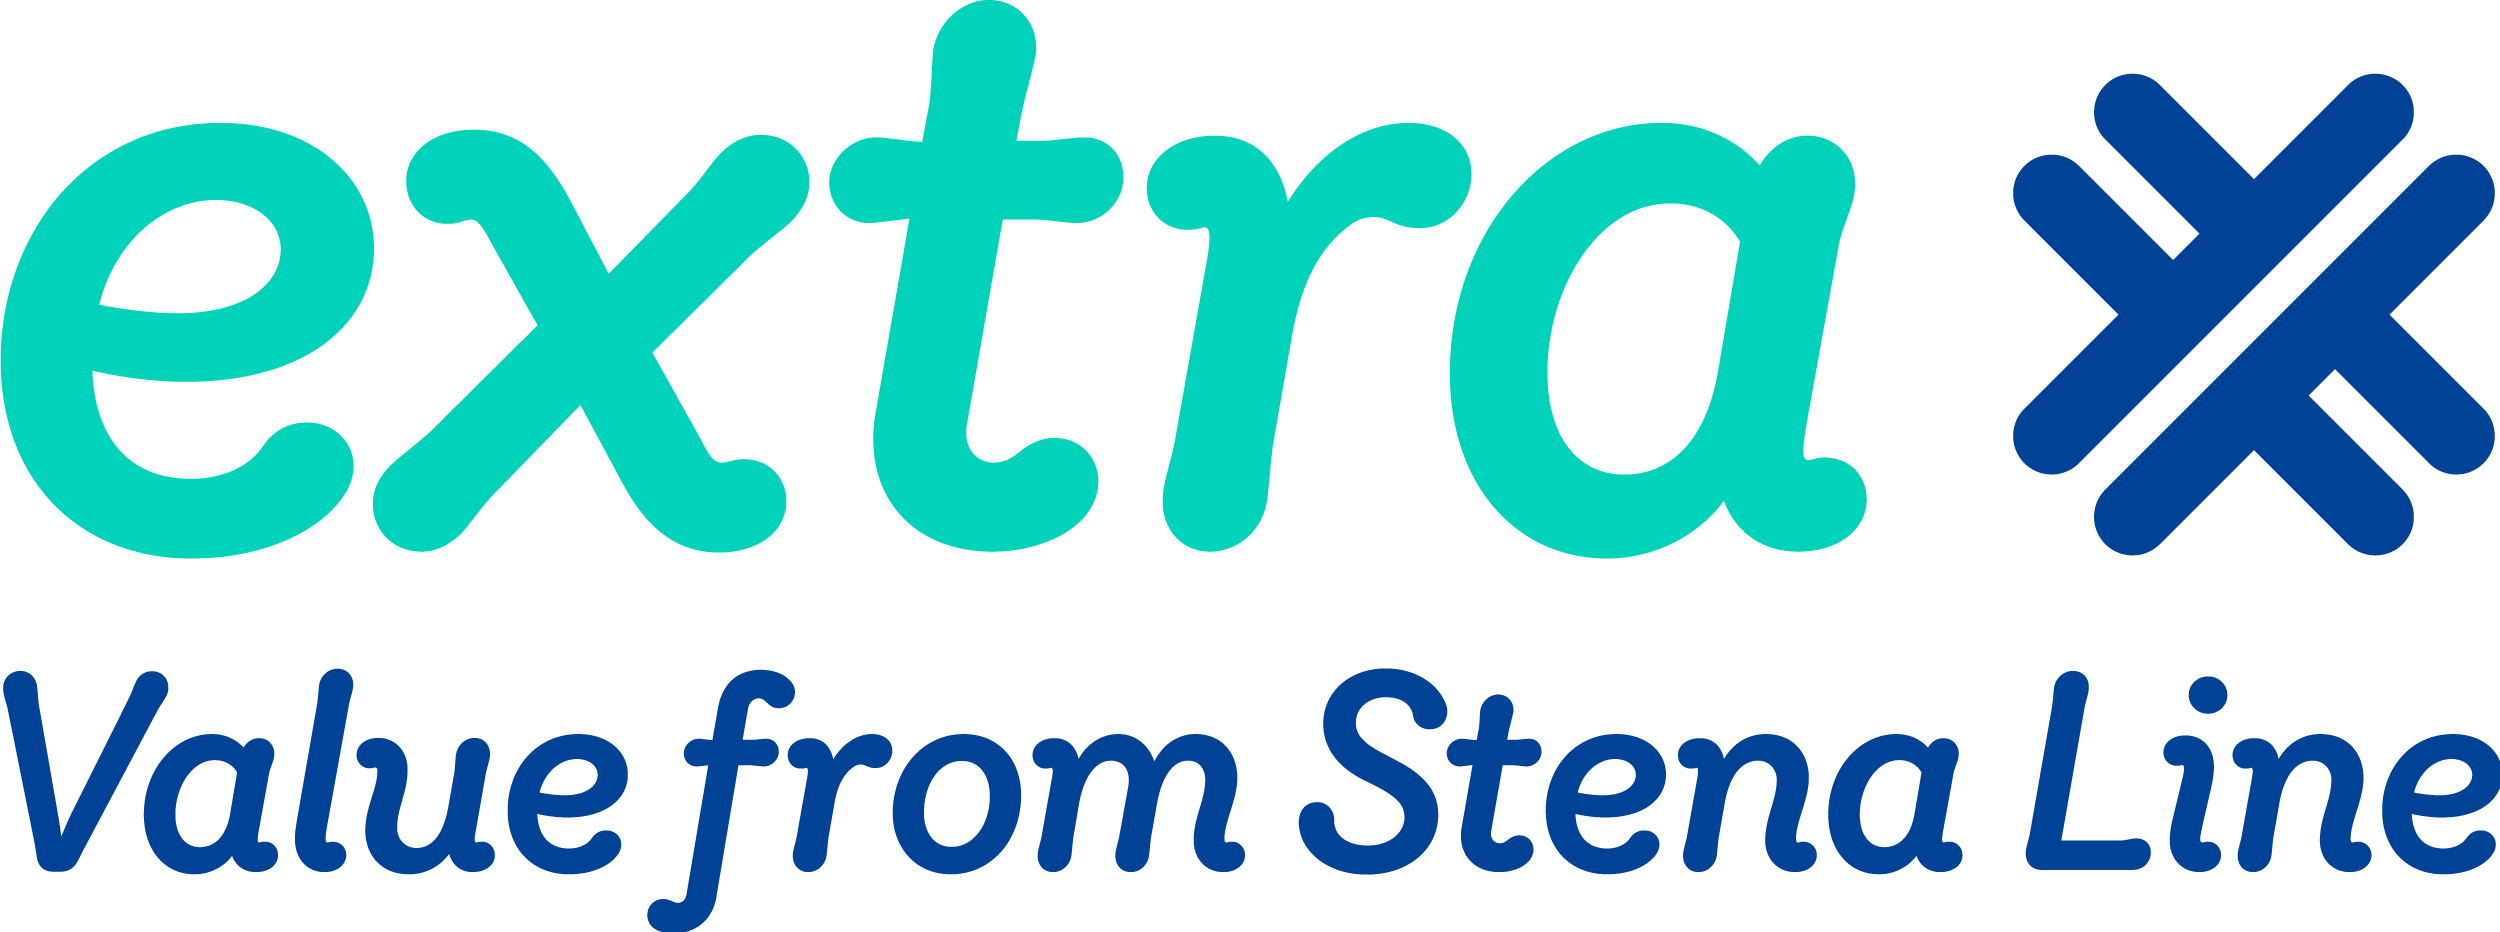 Logo for Stena Lines membership club called "Extra".